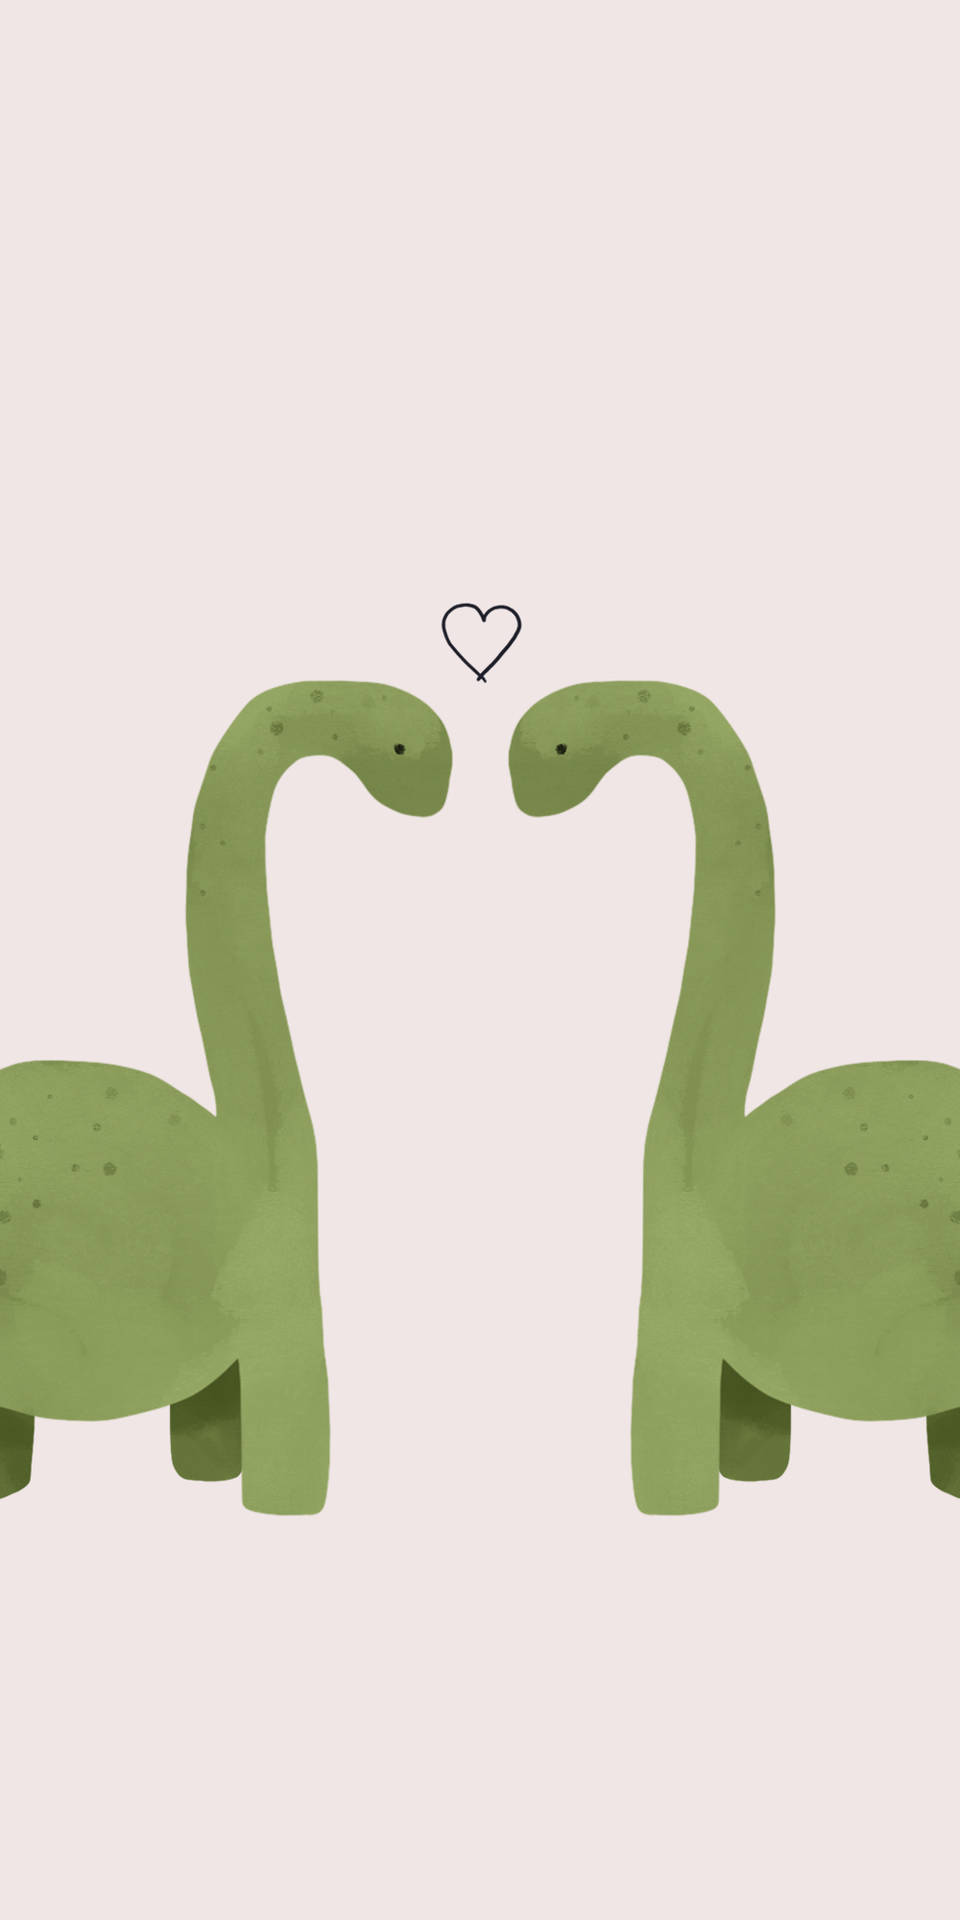 100+] Cute Dinosaur Iphone Wallpapers | Wallpapers.com